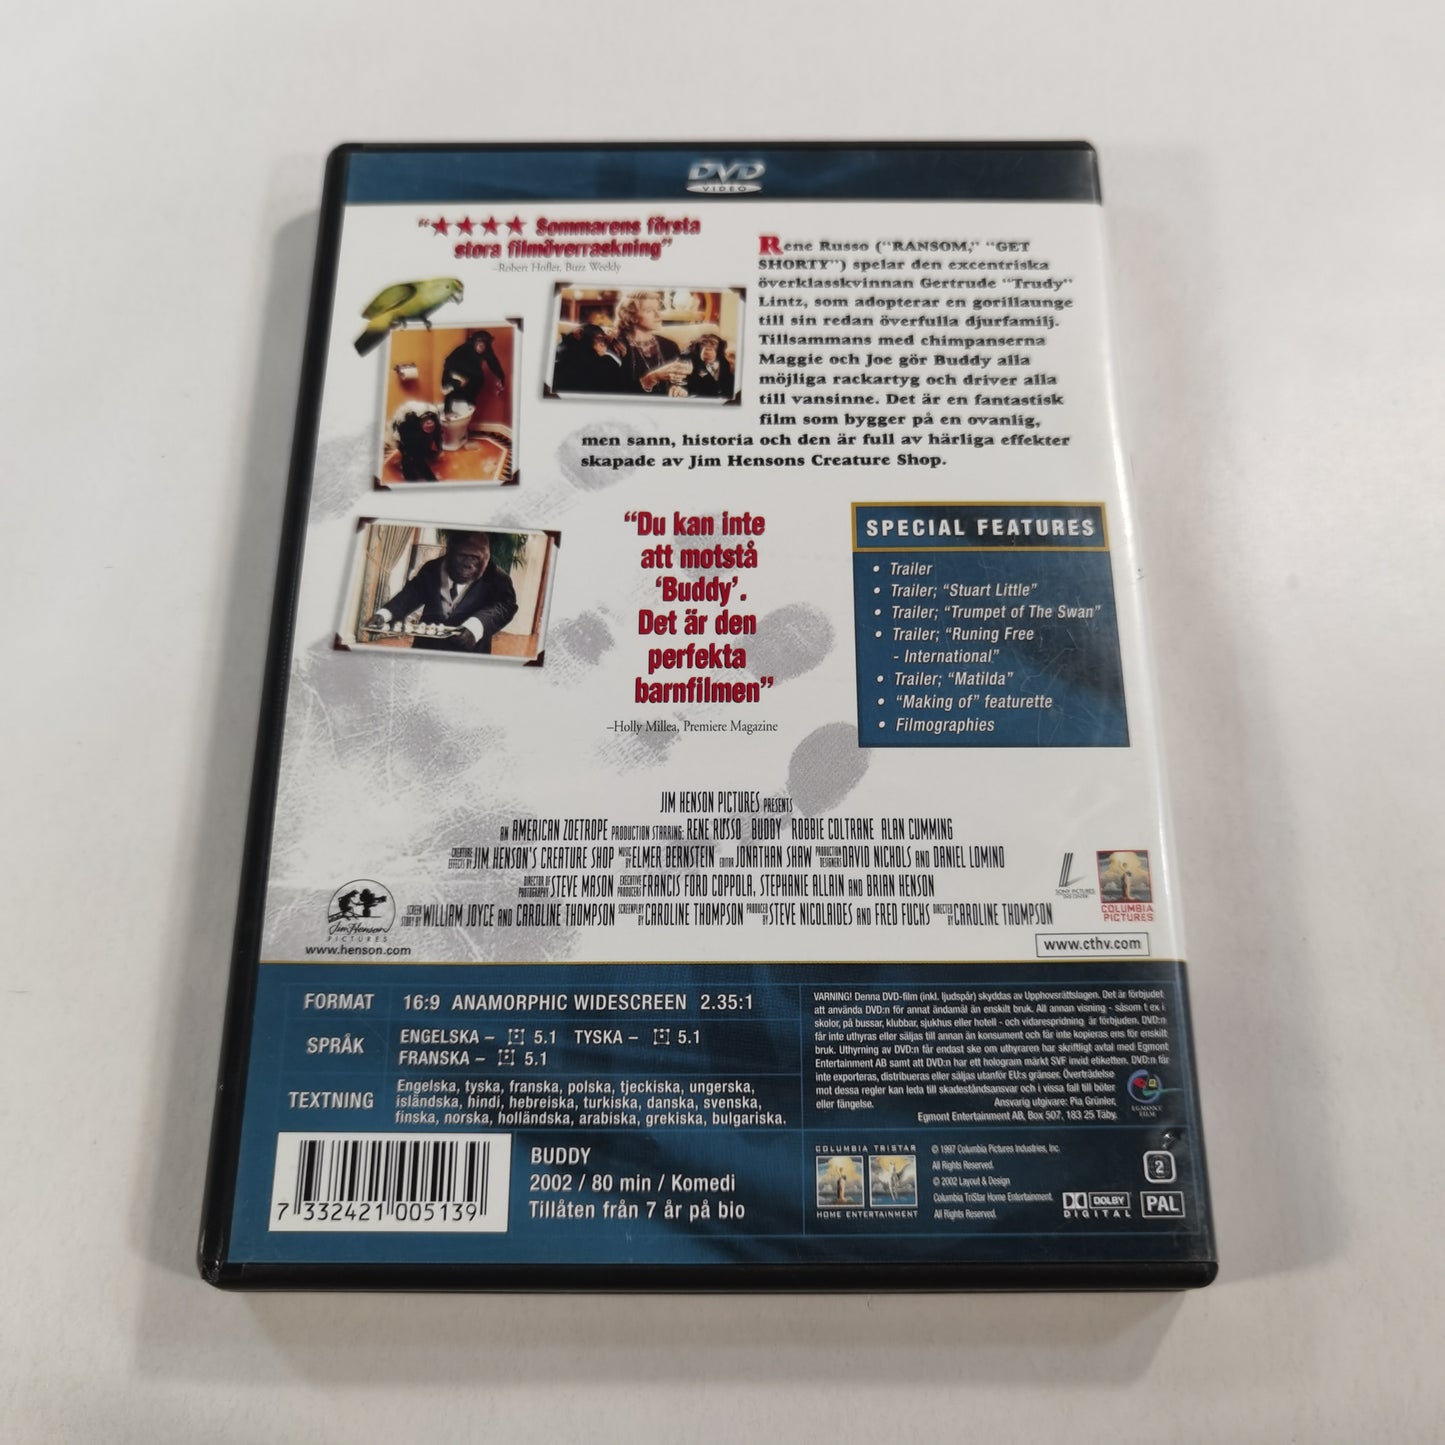 Buddy (1997) - DVD SE 2002